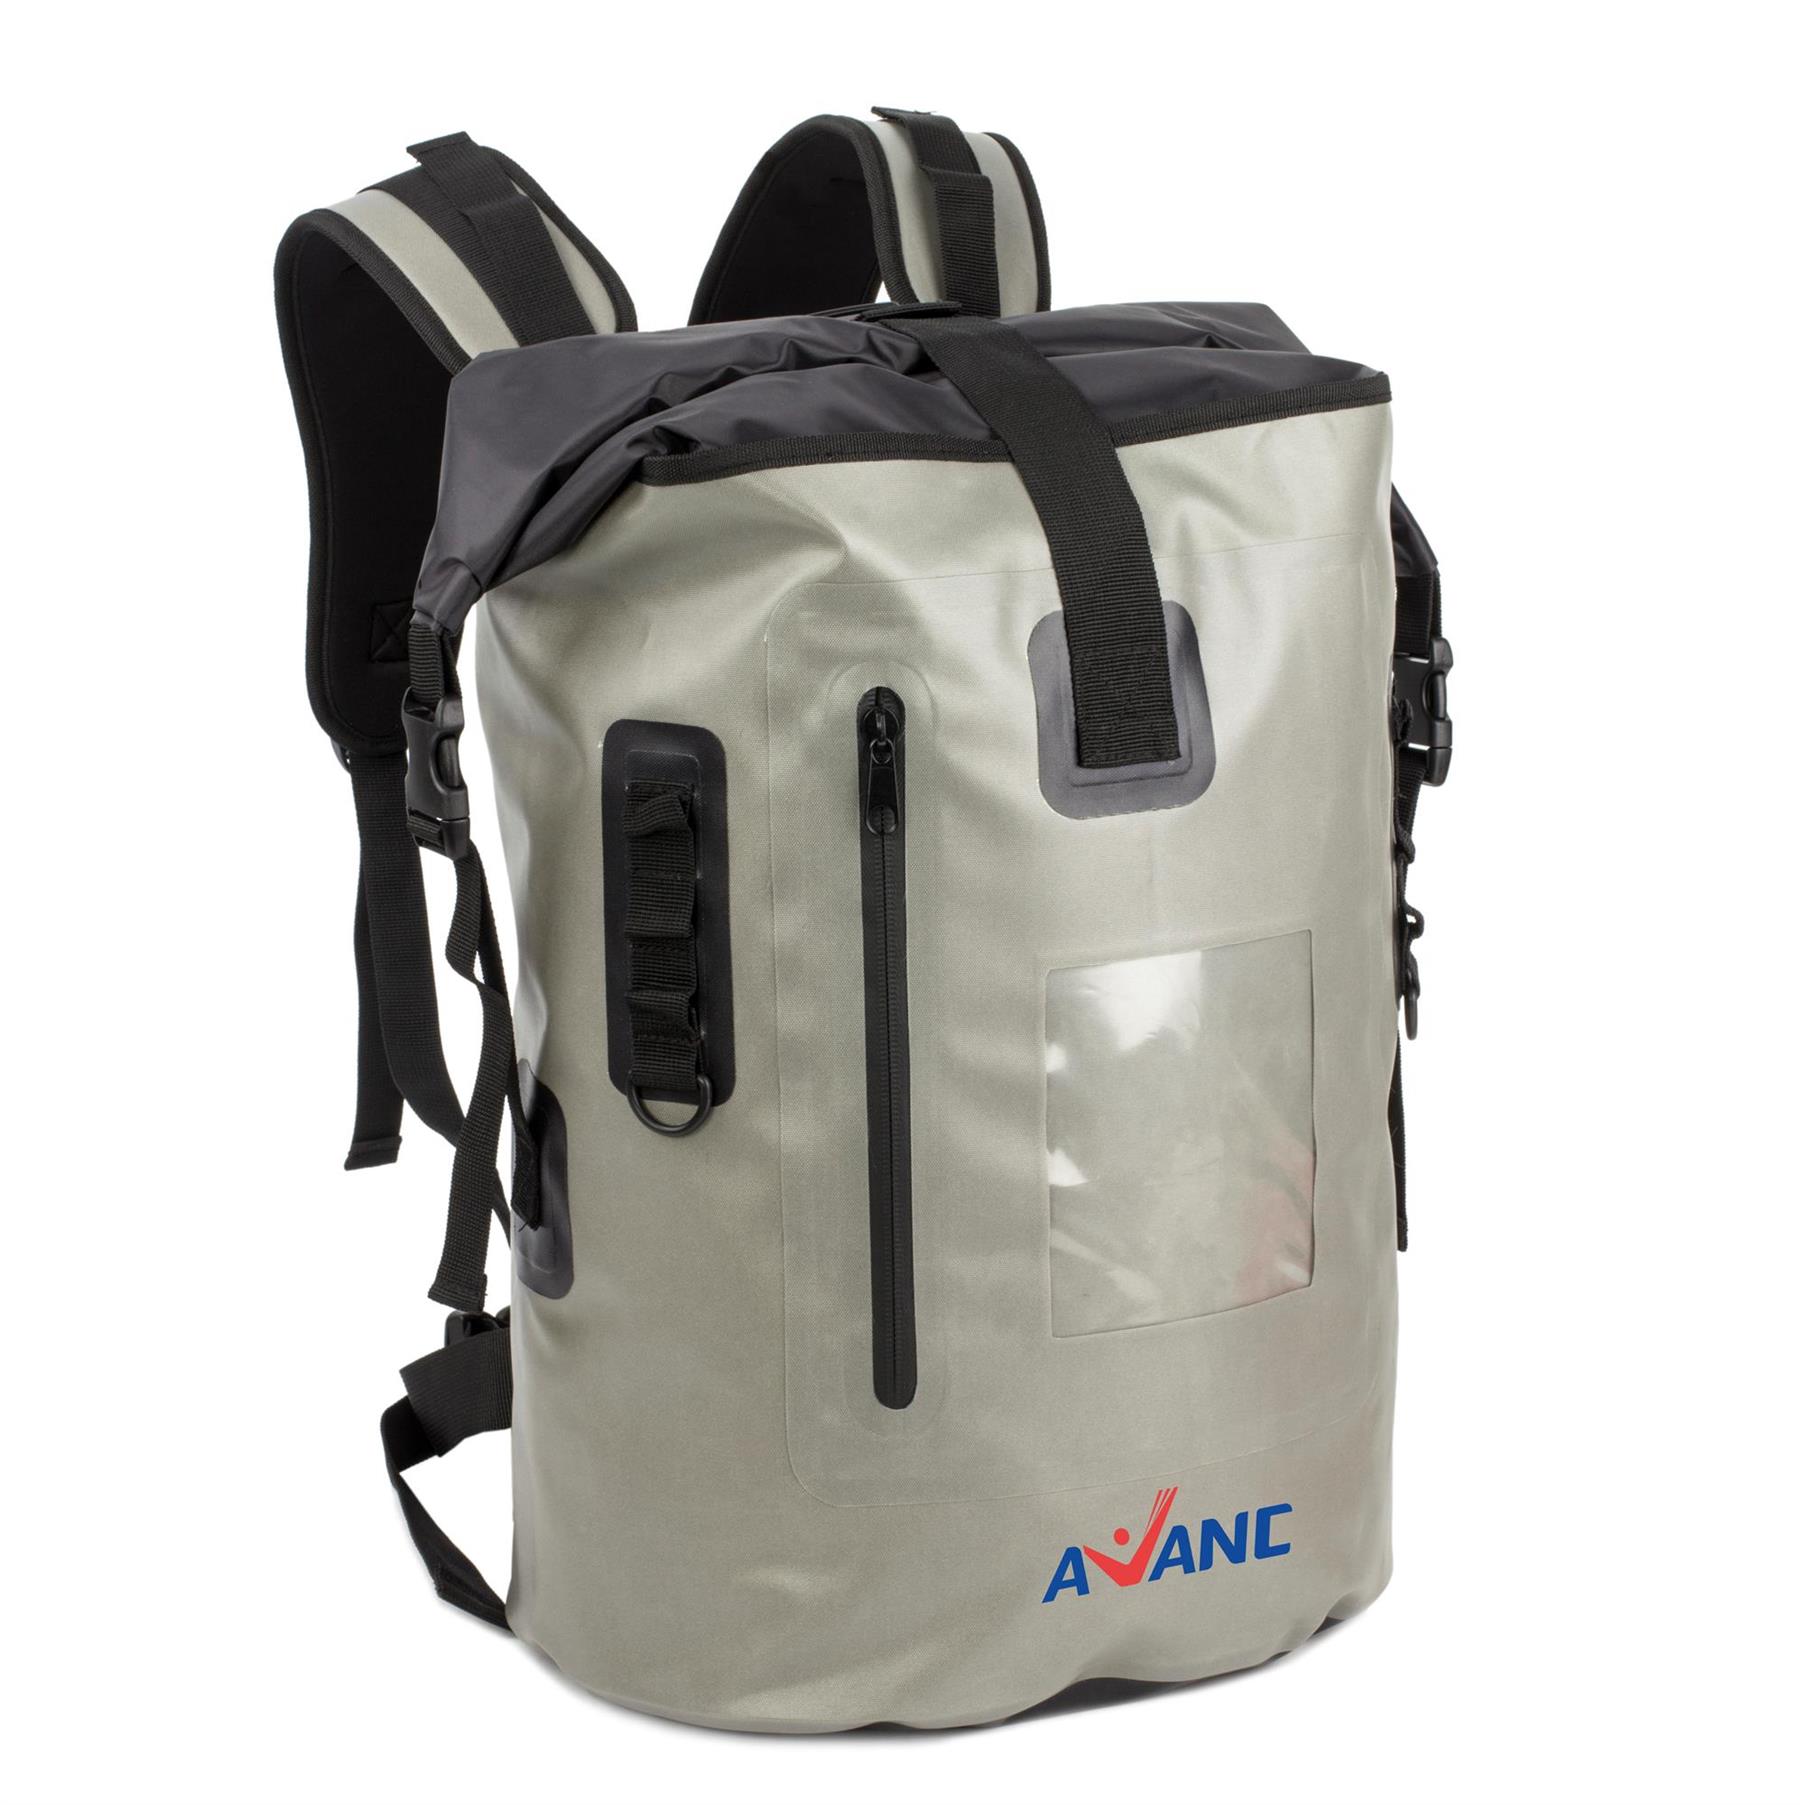 Roll Top Seal Sports Bag, Waterproof Rucksack,Bike bag 35L